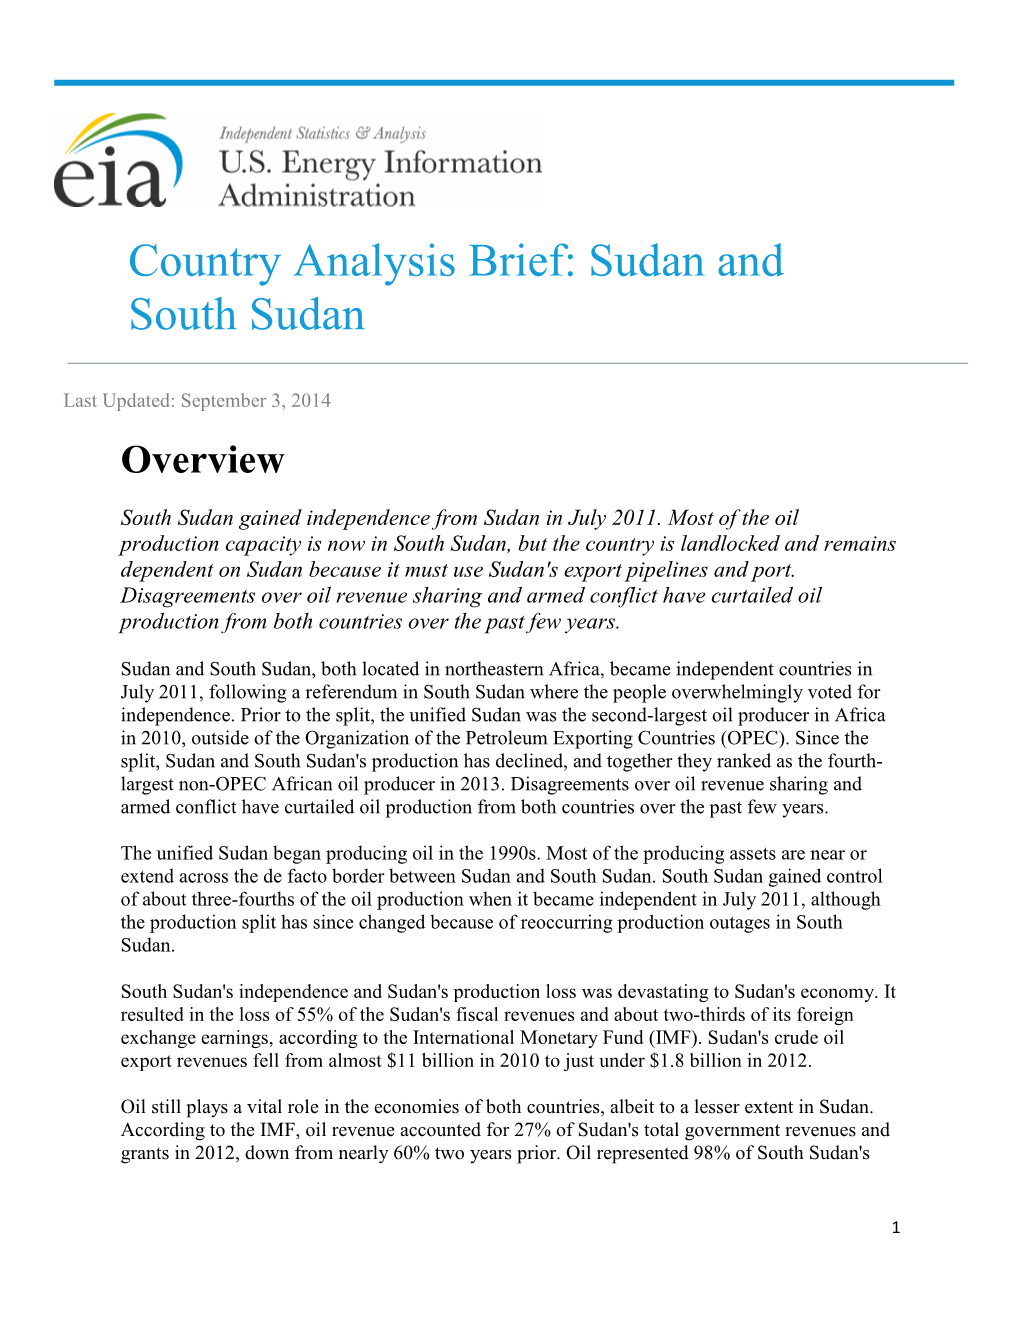 Country Analysis Brief: Sudan and South Sudan